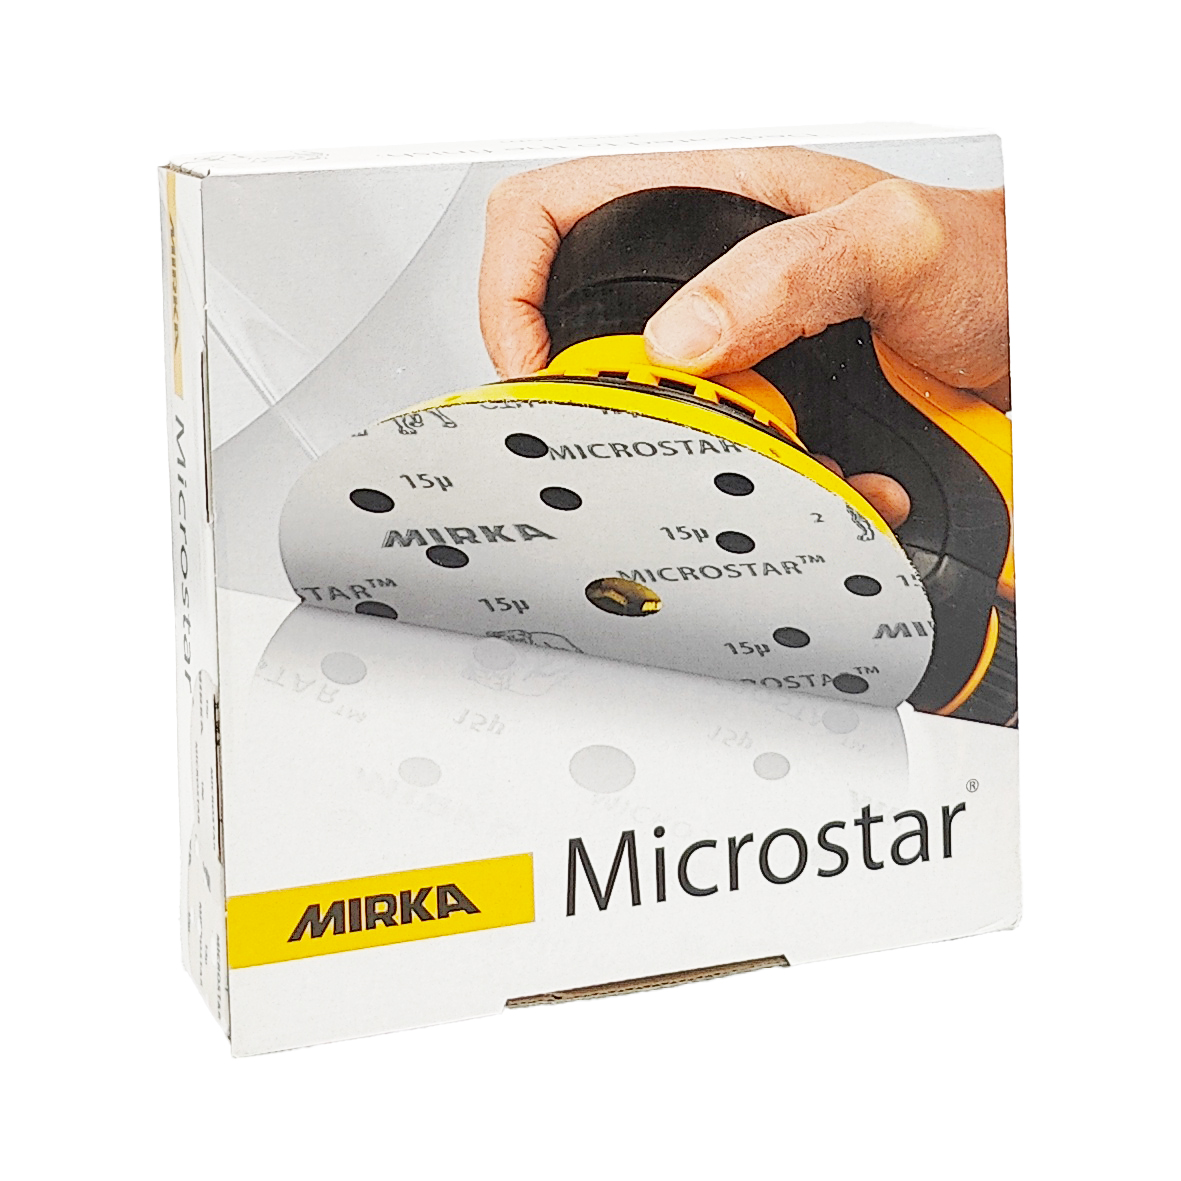 Abbildung Mirka Microstar 150mm 15L Verpackung.